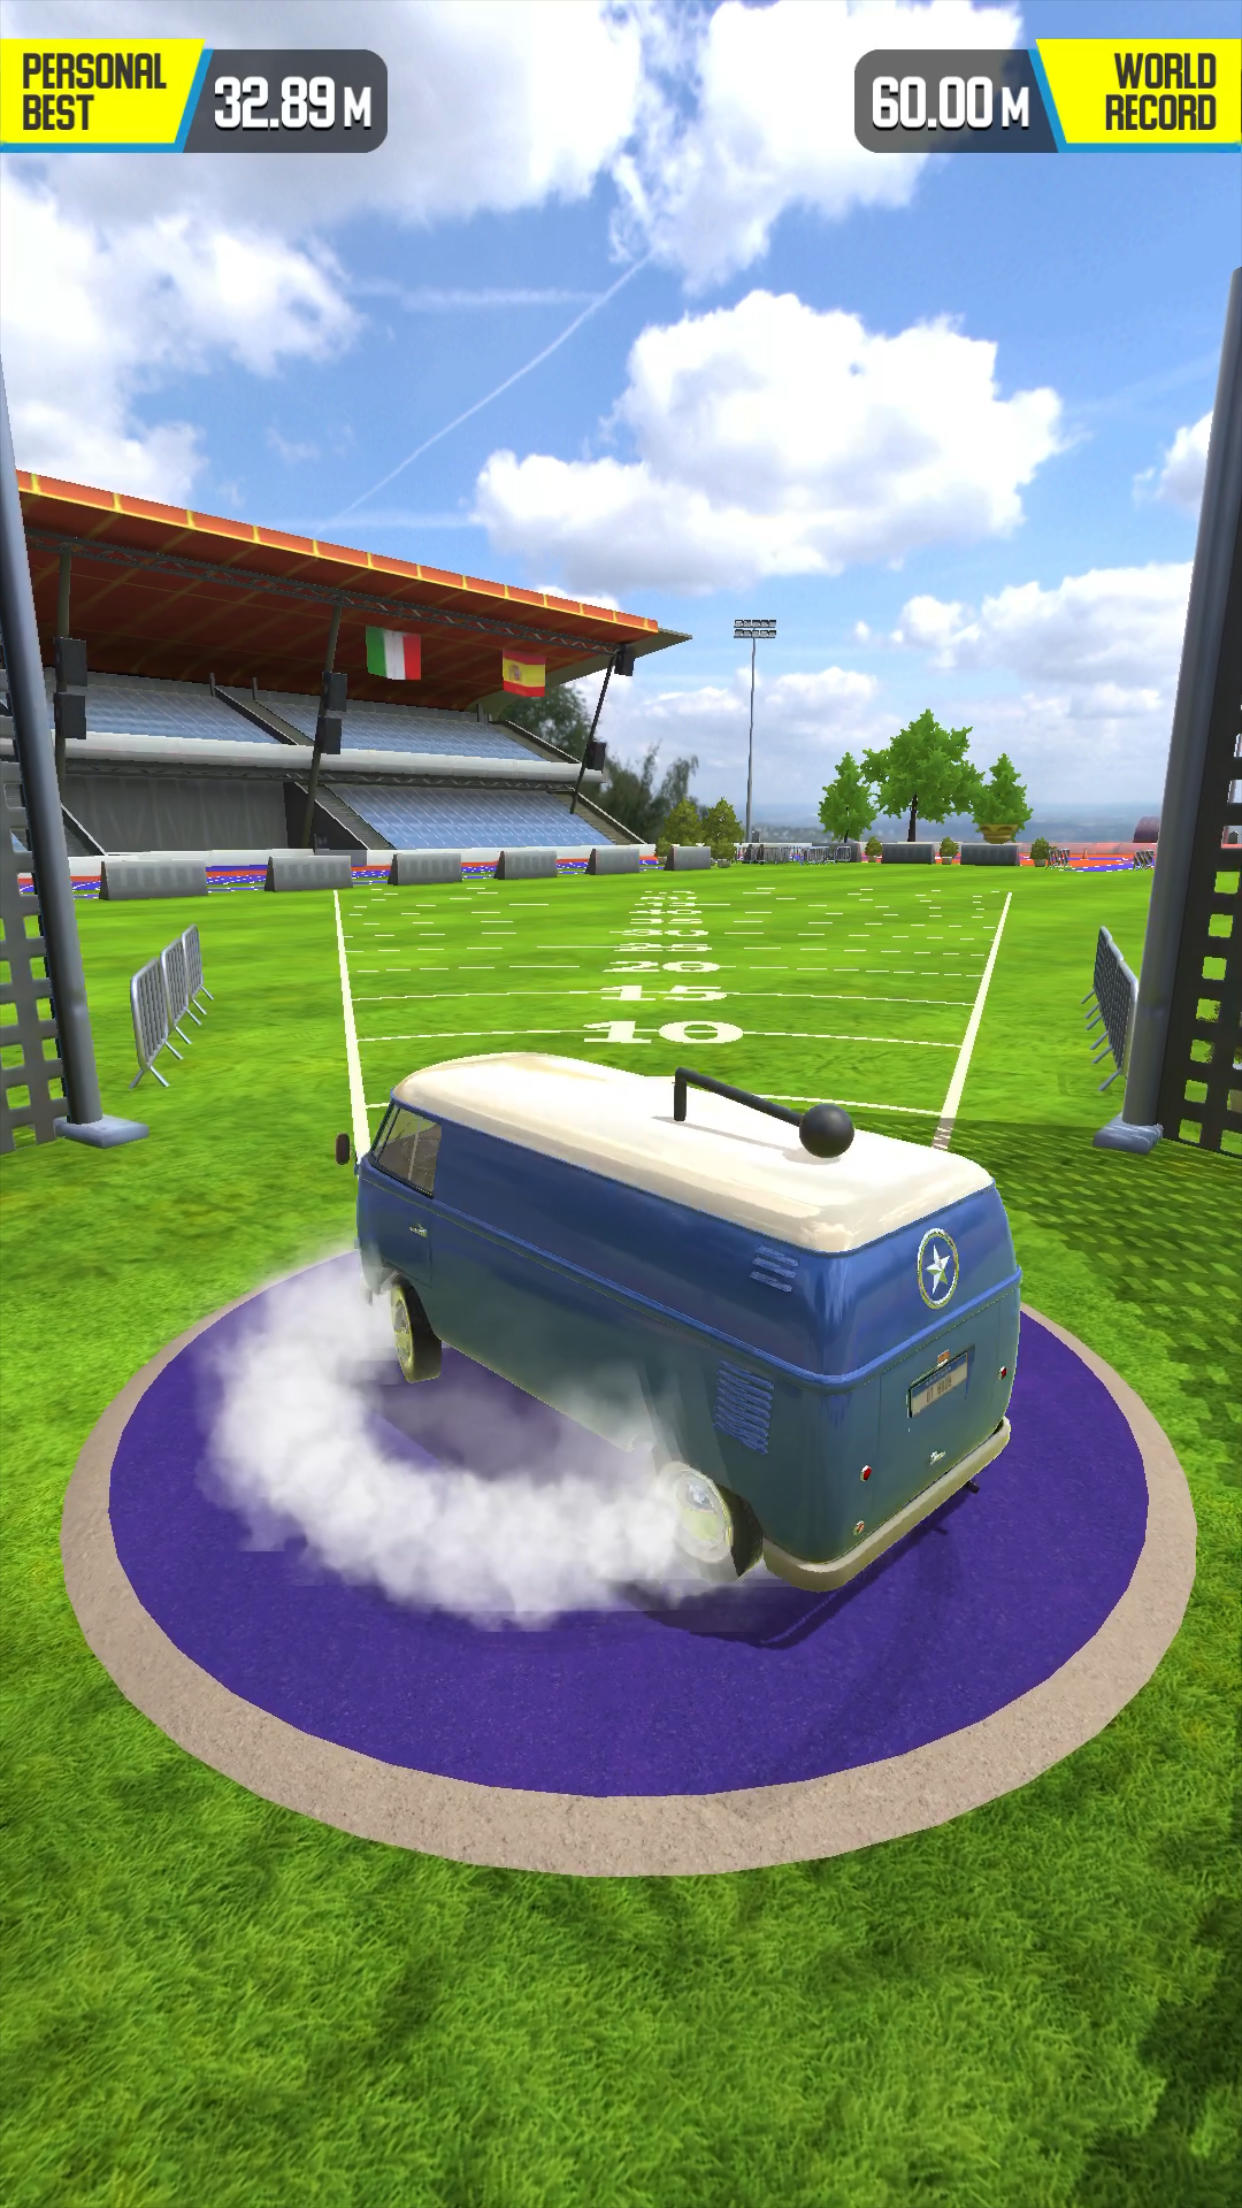 Screenshot 1 of Trò chơi xe hơi mùa hè 2021 1.4.14